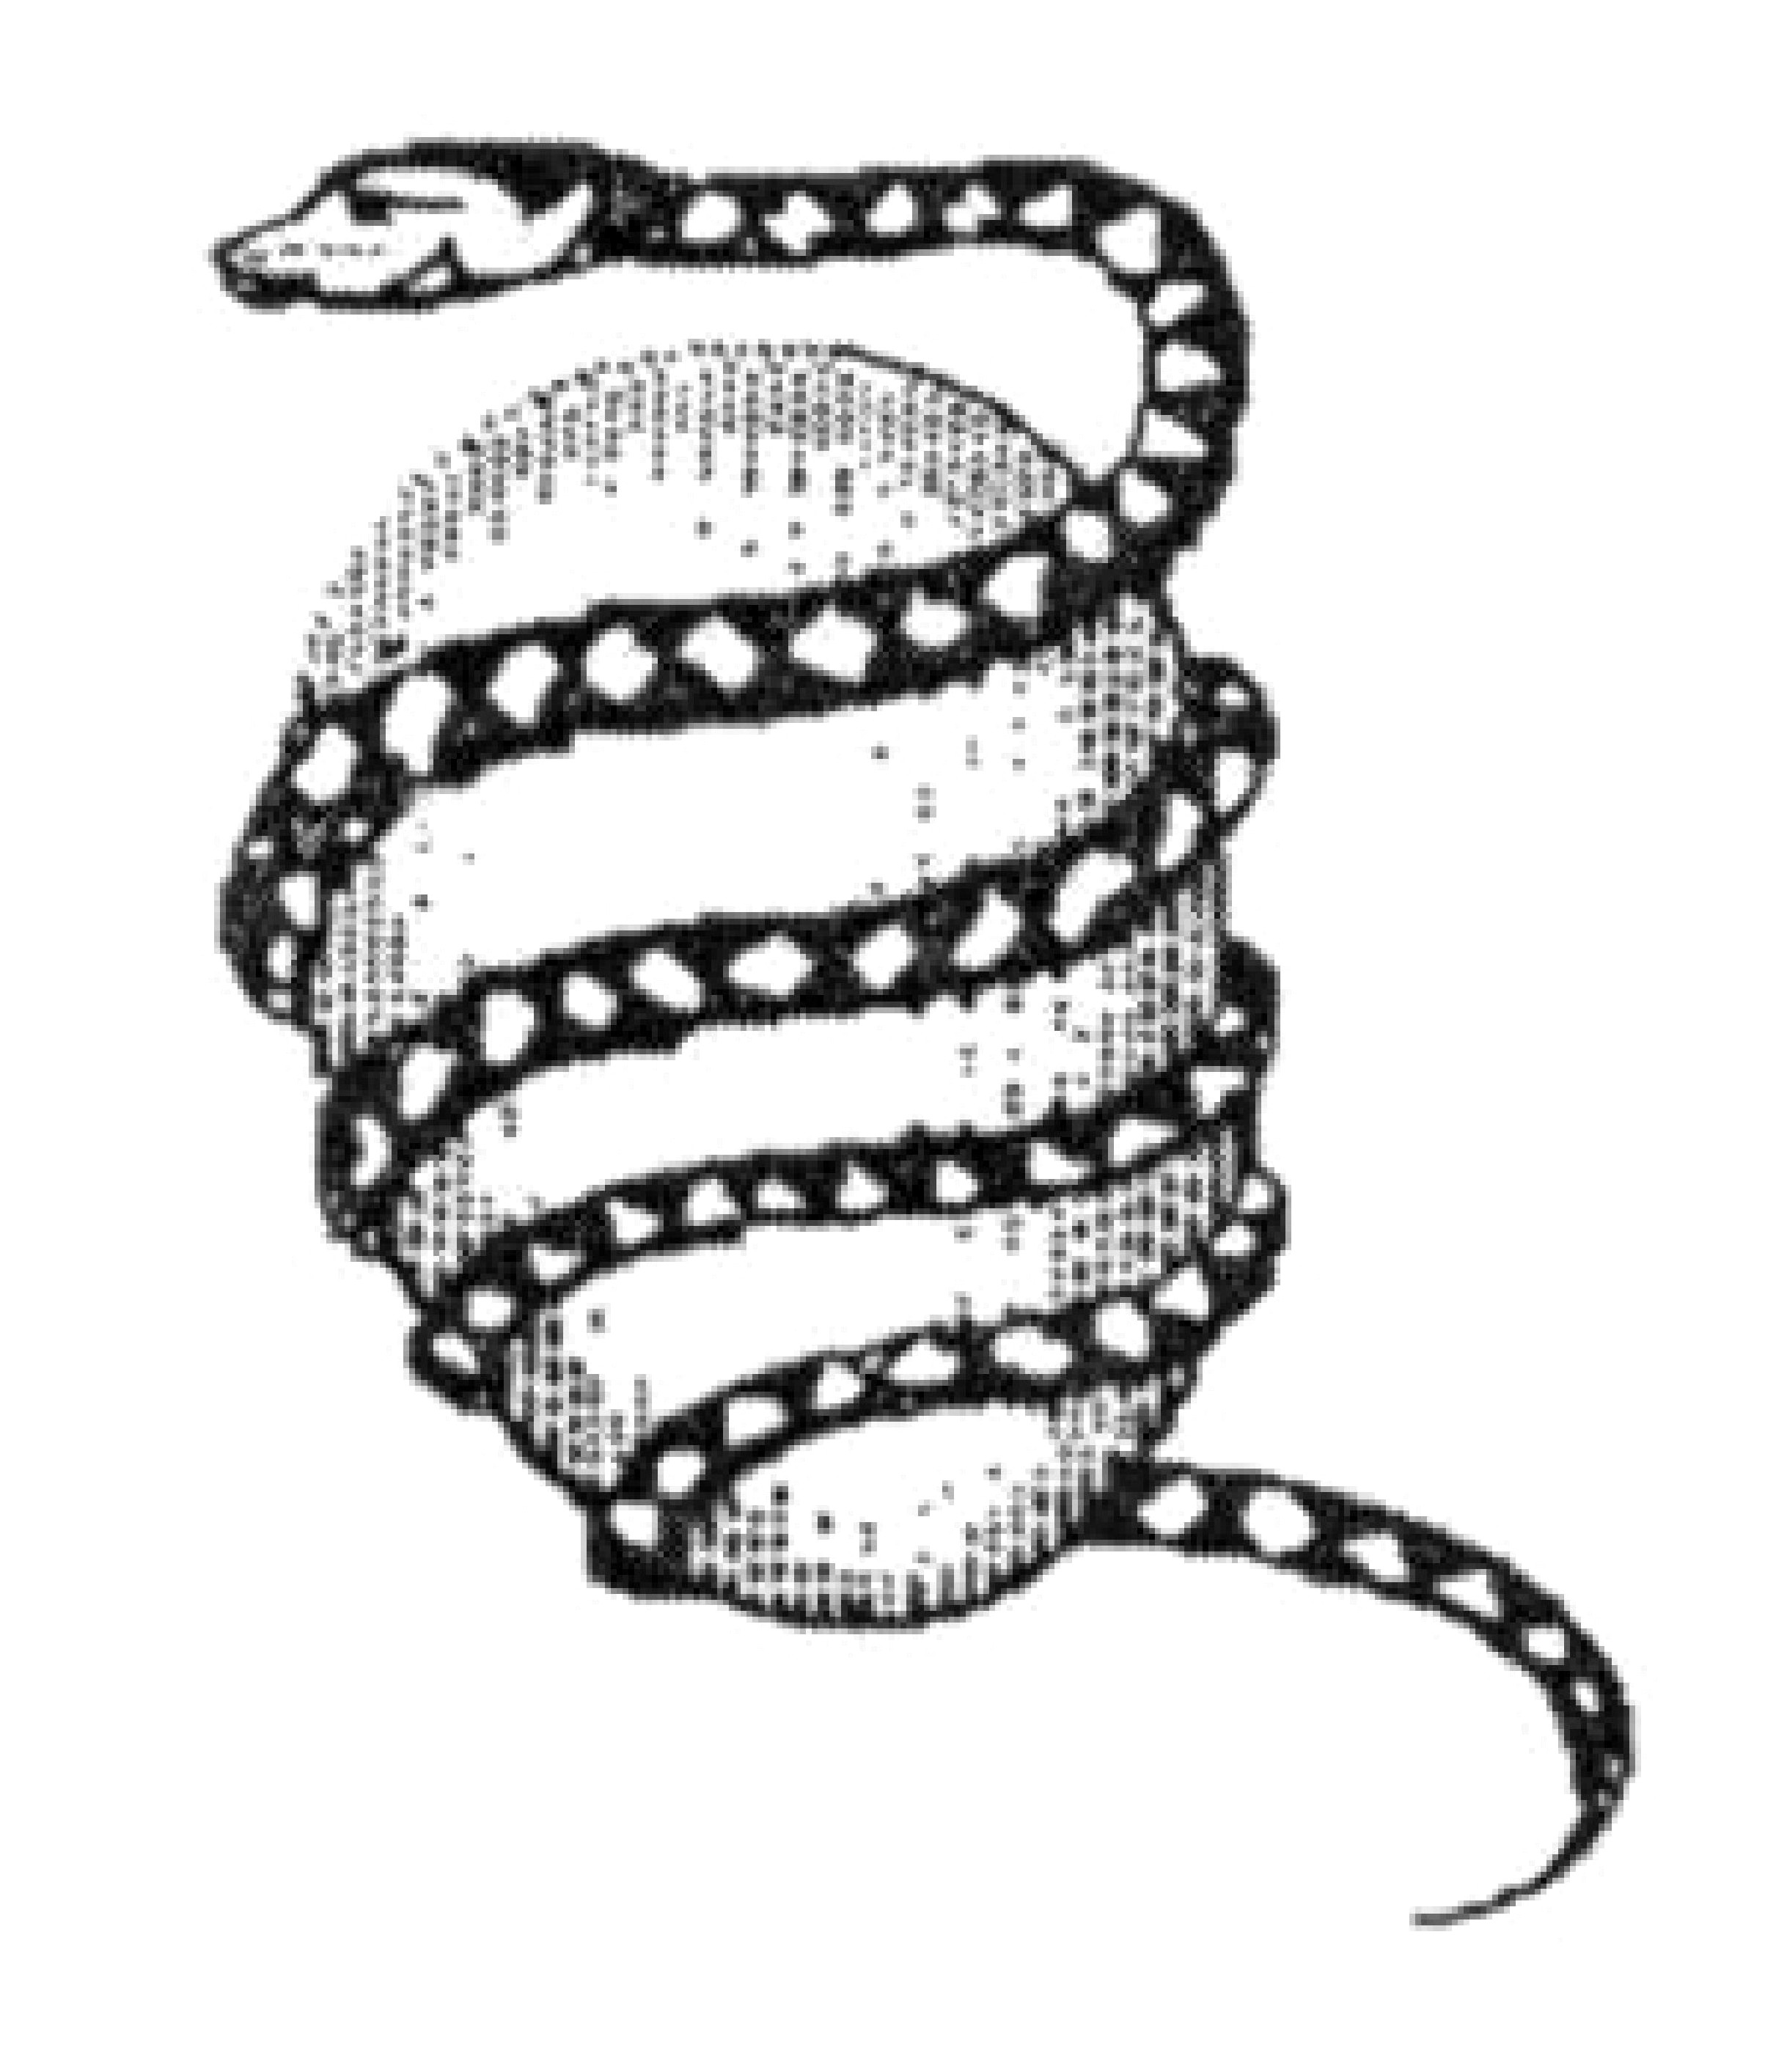 Mito órfico da serpente e o ovo